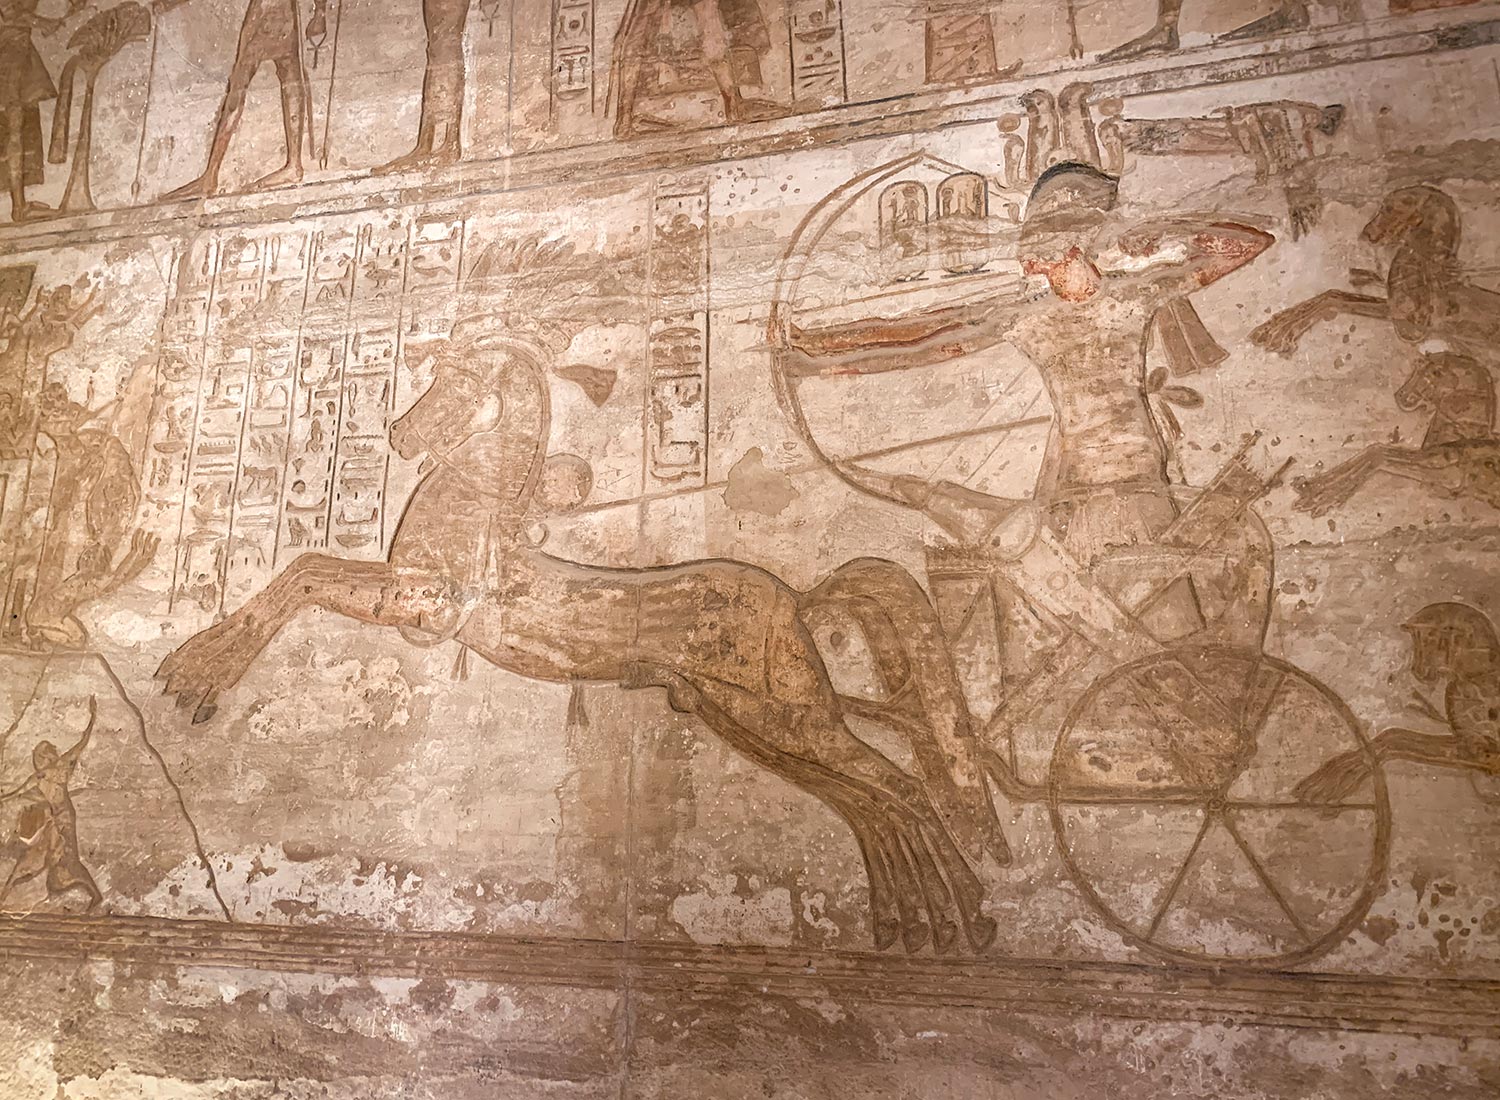 Intérieur, Abou Simbel, Égypte / Inside, Abu Simbel, Egypt